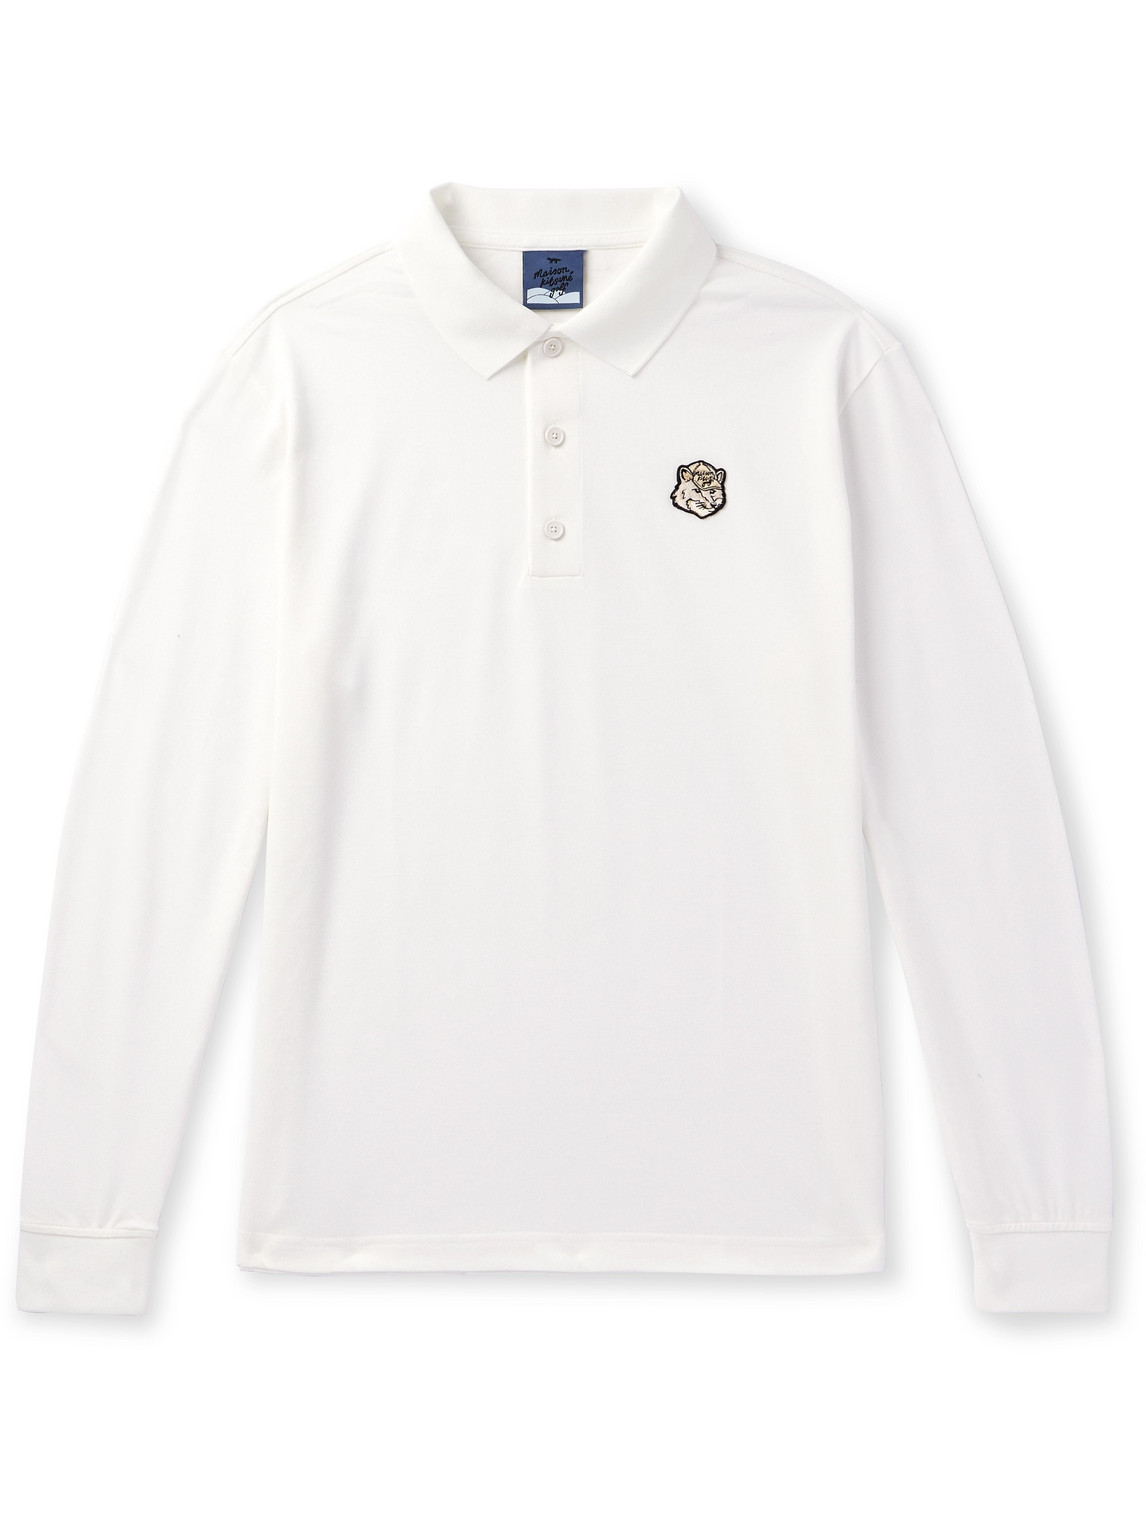 Maison Kitsuné - Logo-Appliquéd Cotton-Blend Piqué Polo Shirt - Men - White - L von Maison Kitsuné